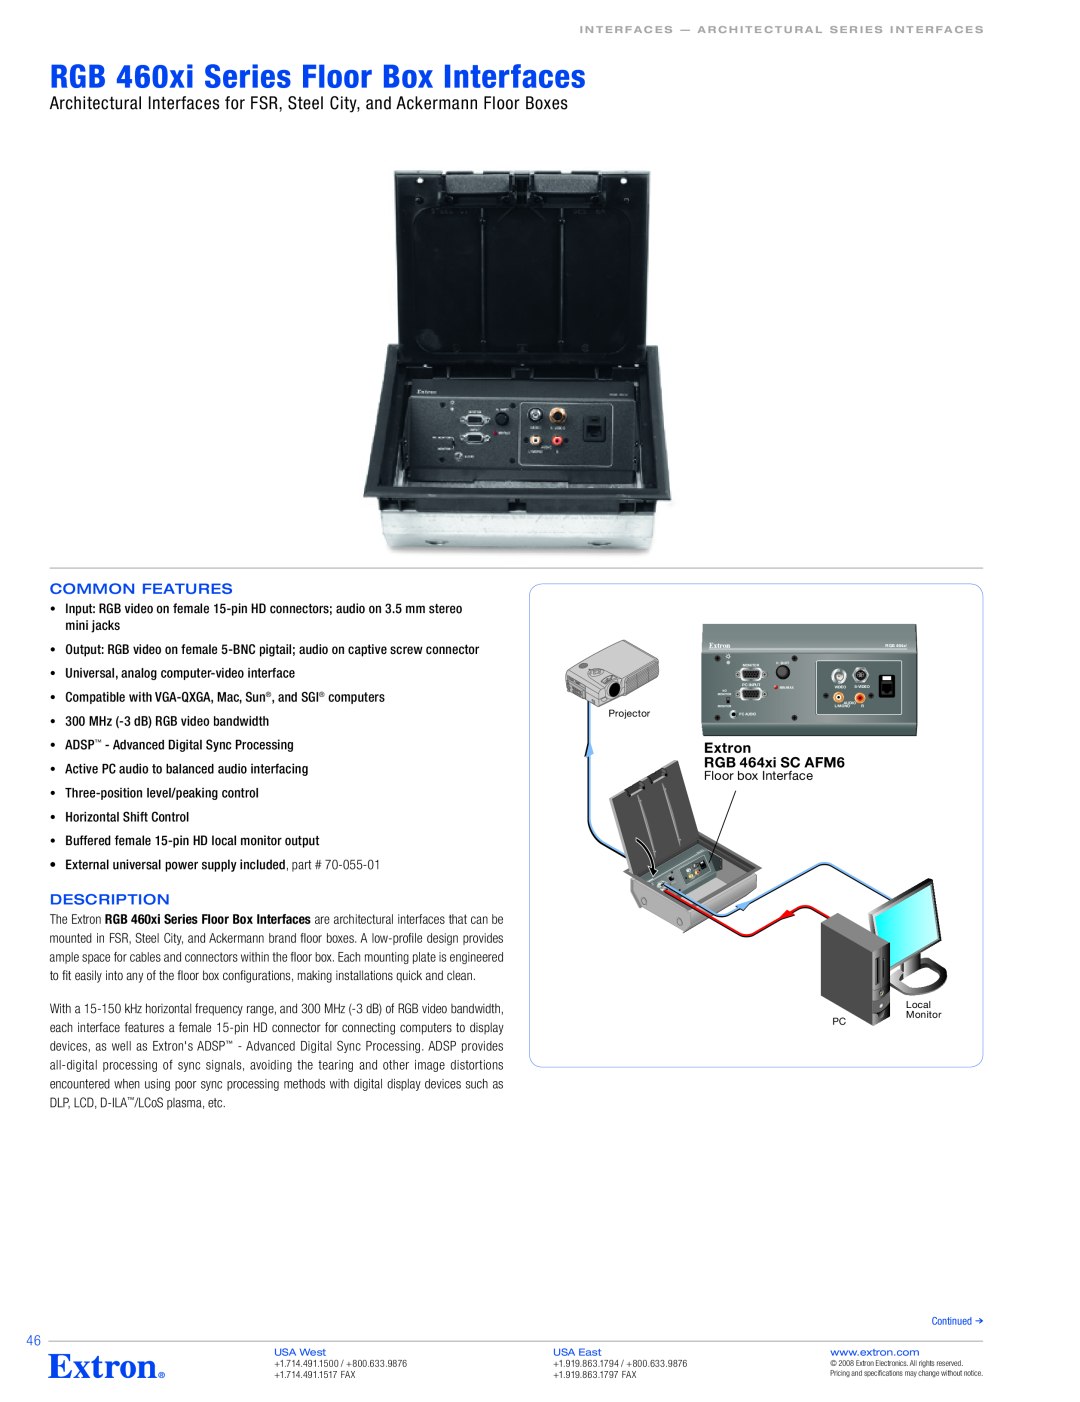 Extron electronic specifications RGB 460xi Series Floor Box Interfaces, Common Features, Description, Extron 